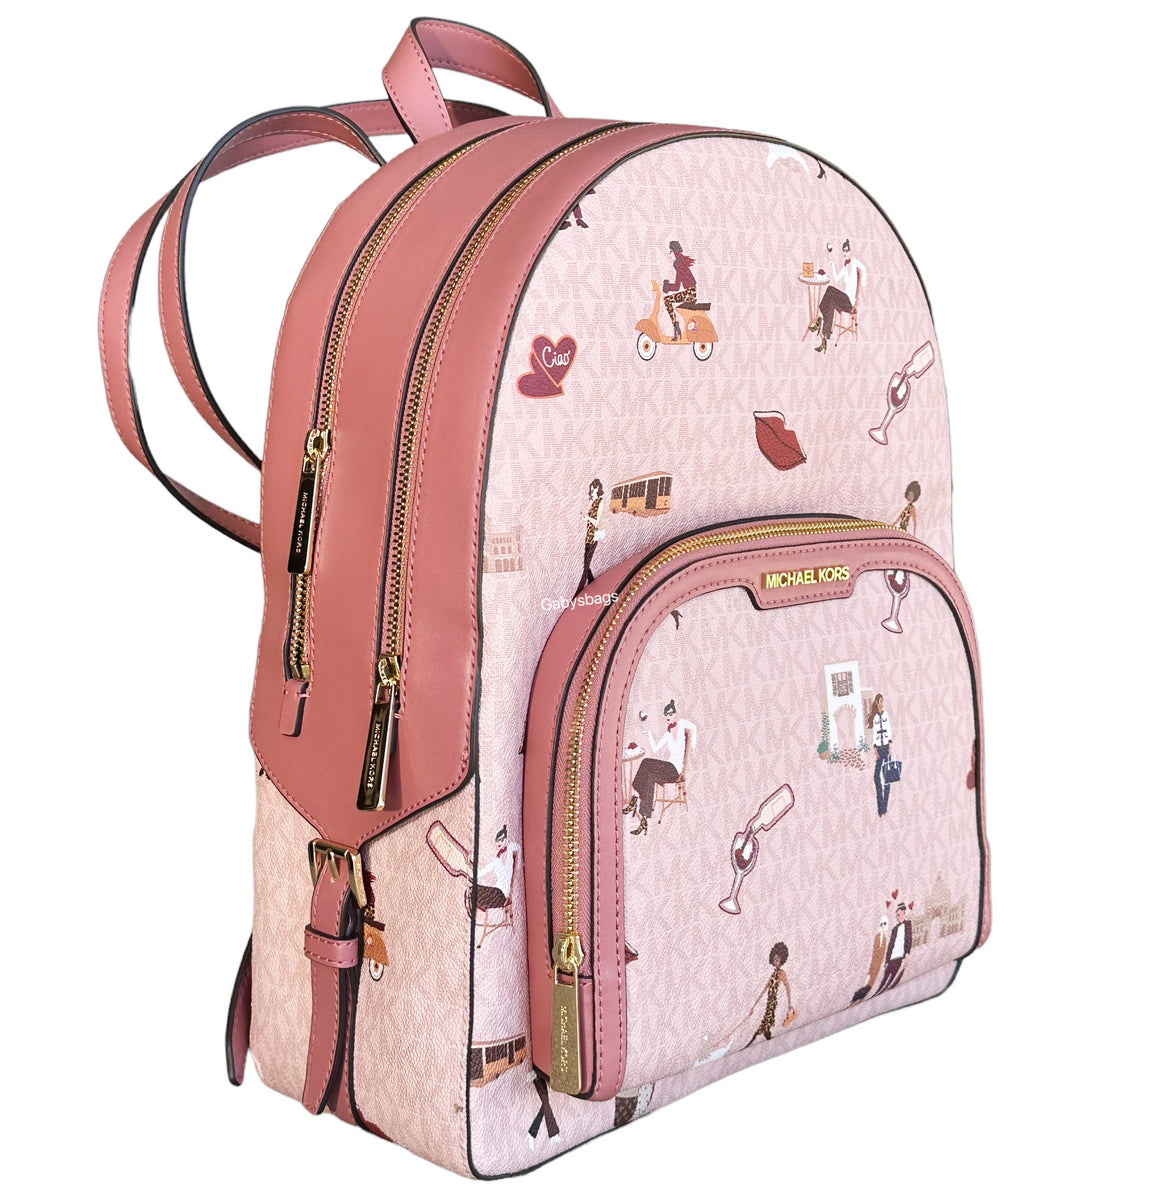 Michael Kors Jet Set Girls Jaycee Large Backpack School Bag Brown